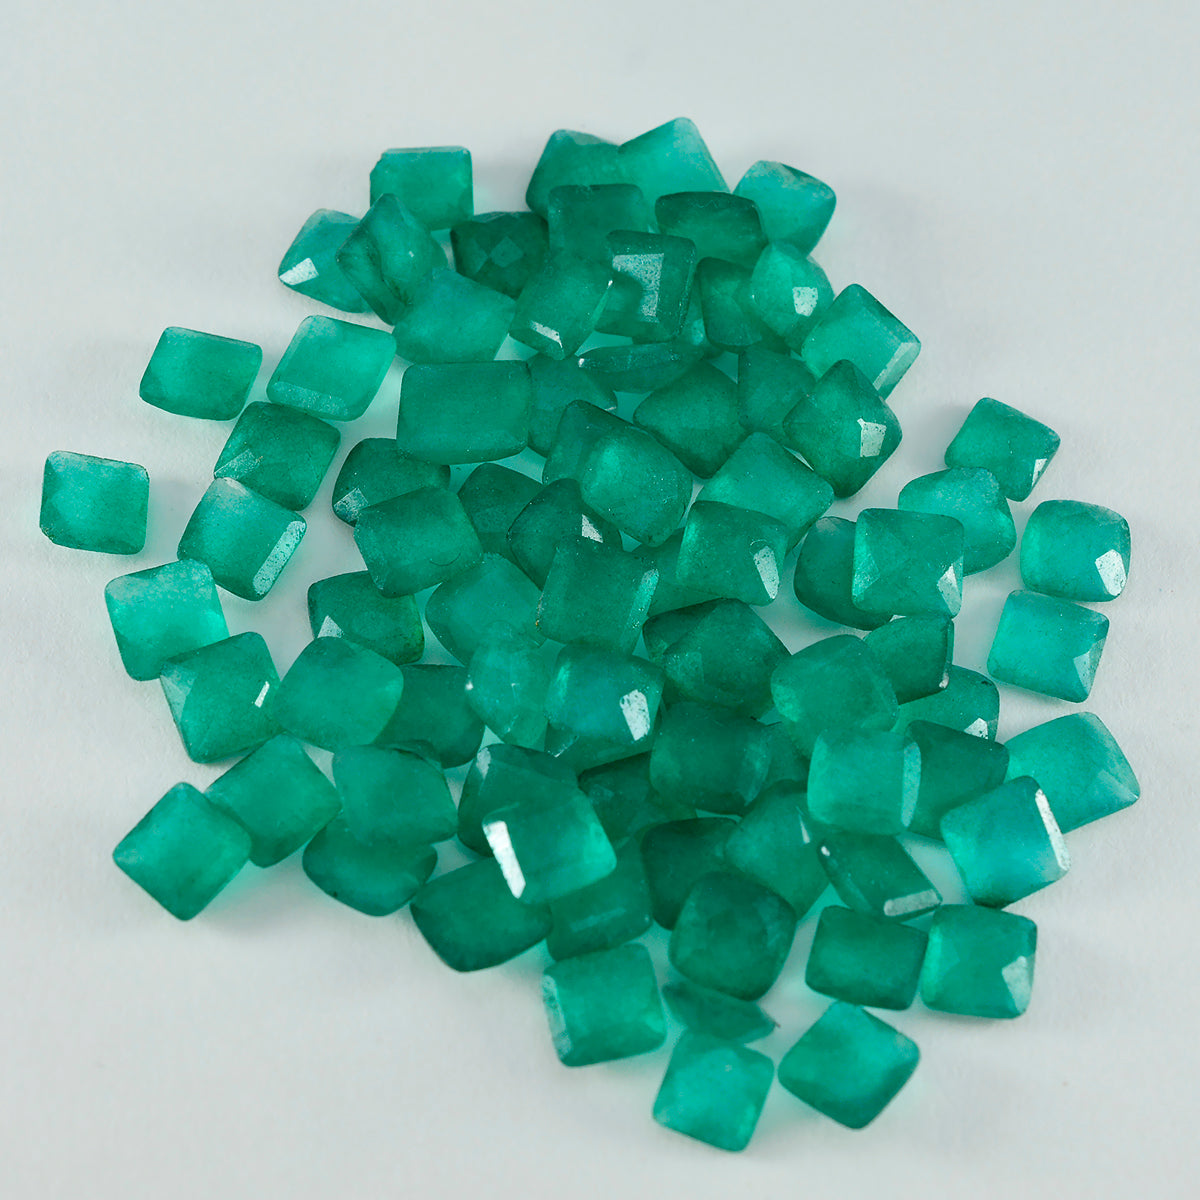 riyogems 1 st äkta grön jaspis facetterad 5x5 mm kvadratisk form underbar kvalitetspärla